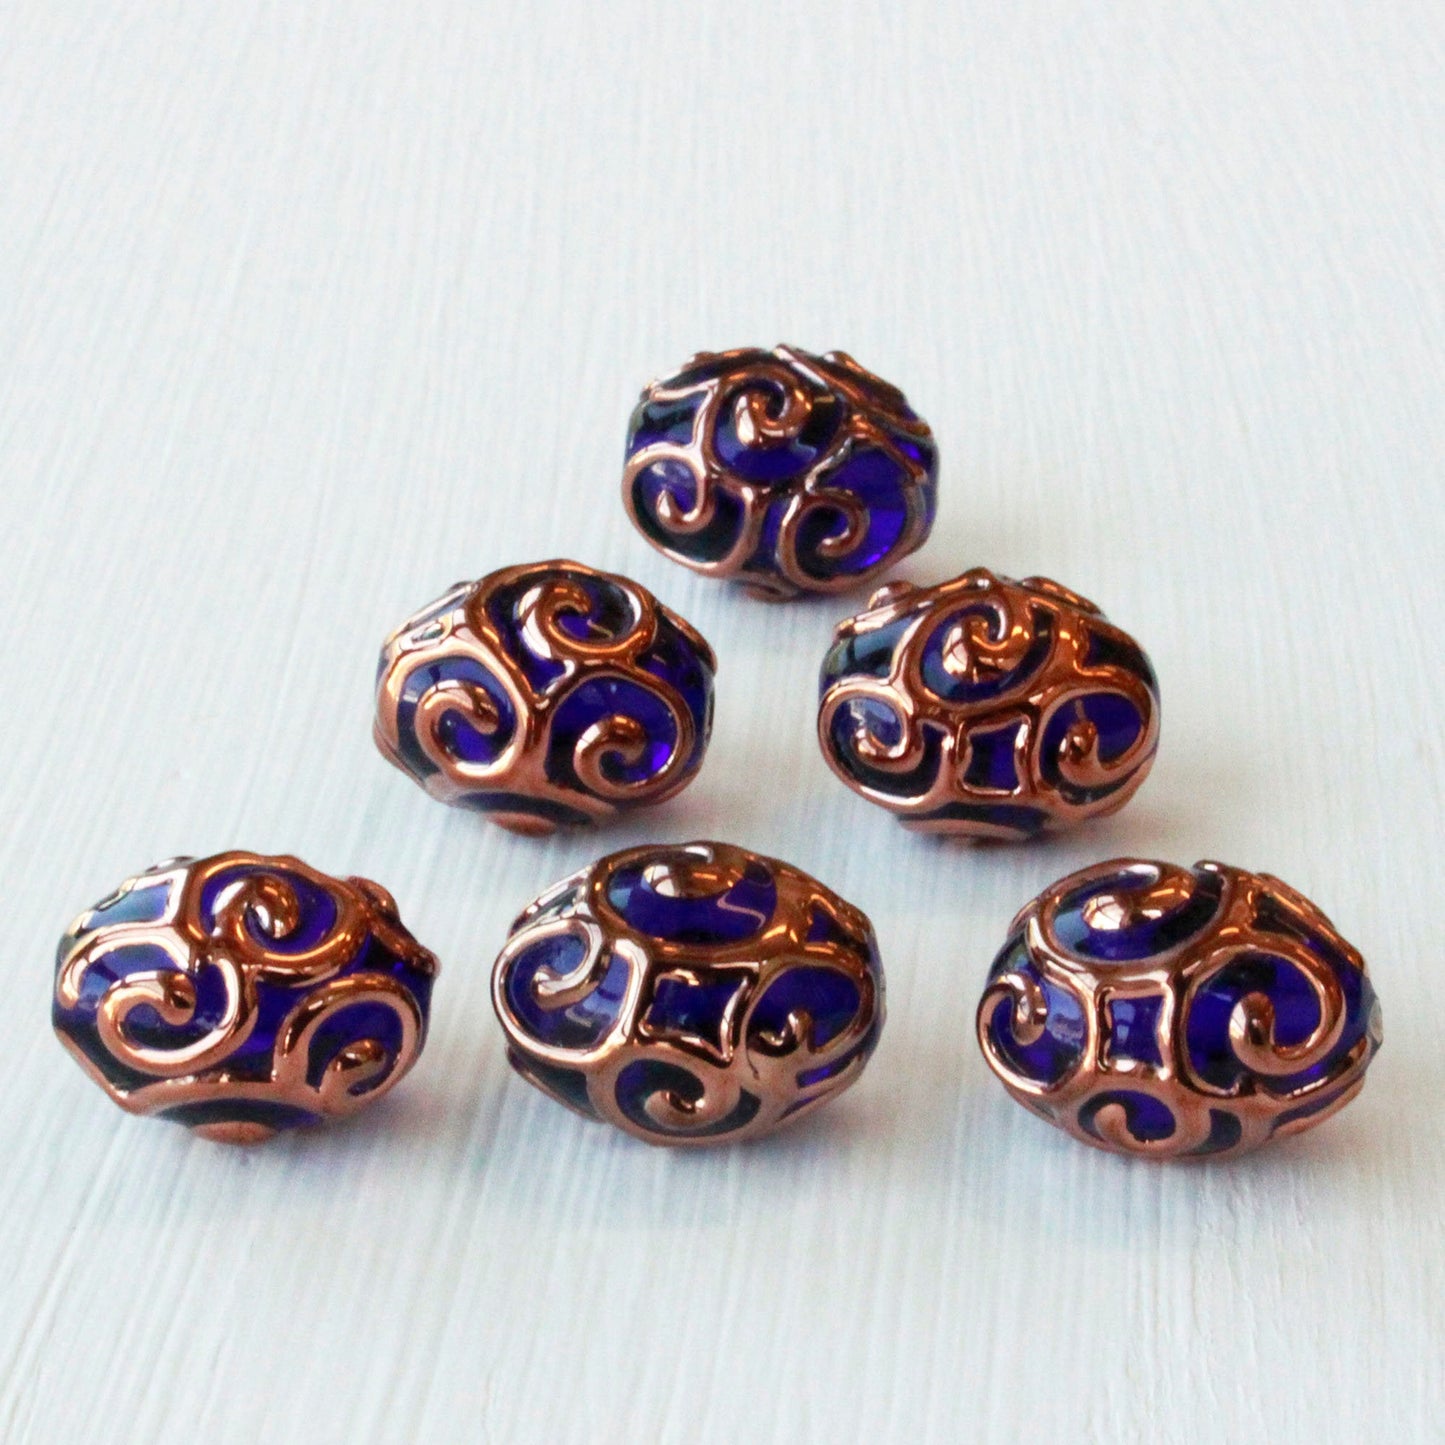 17x12mm Handmade Lampwork Beads - Cobalt - 2, 4 or 8